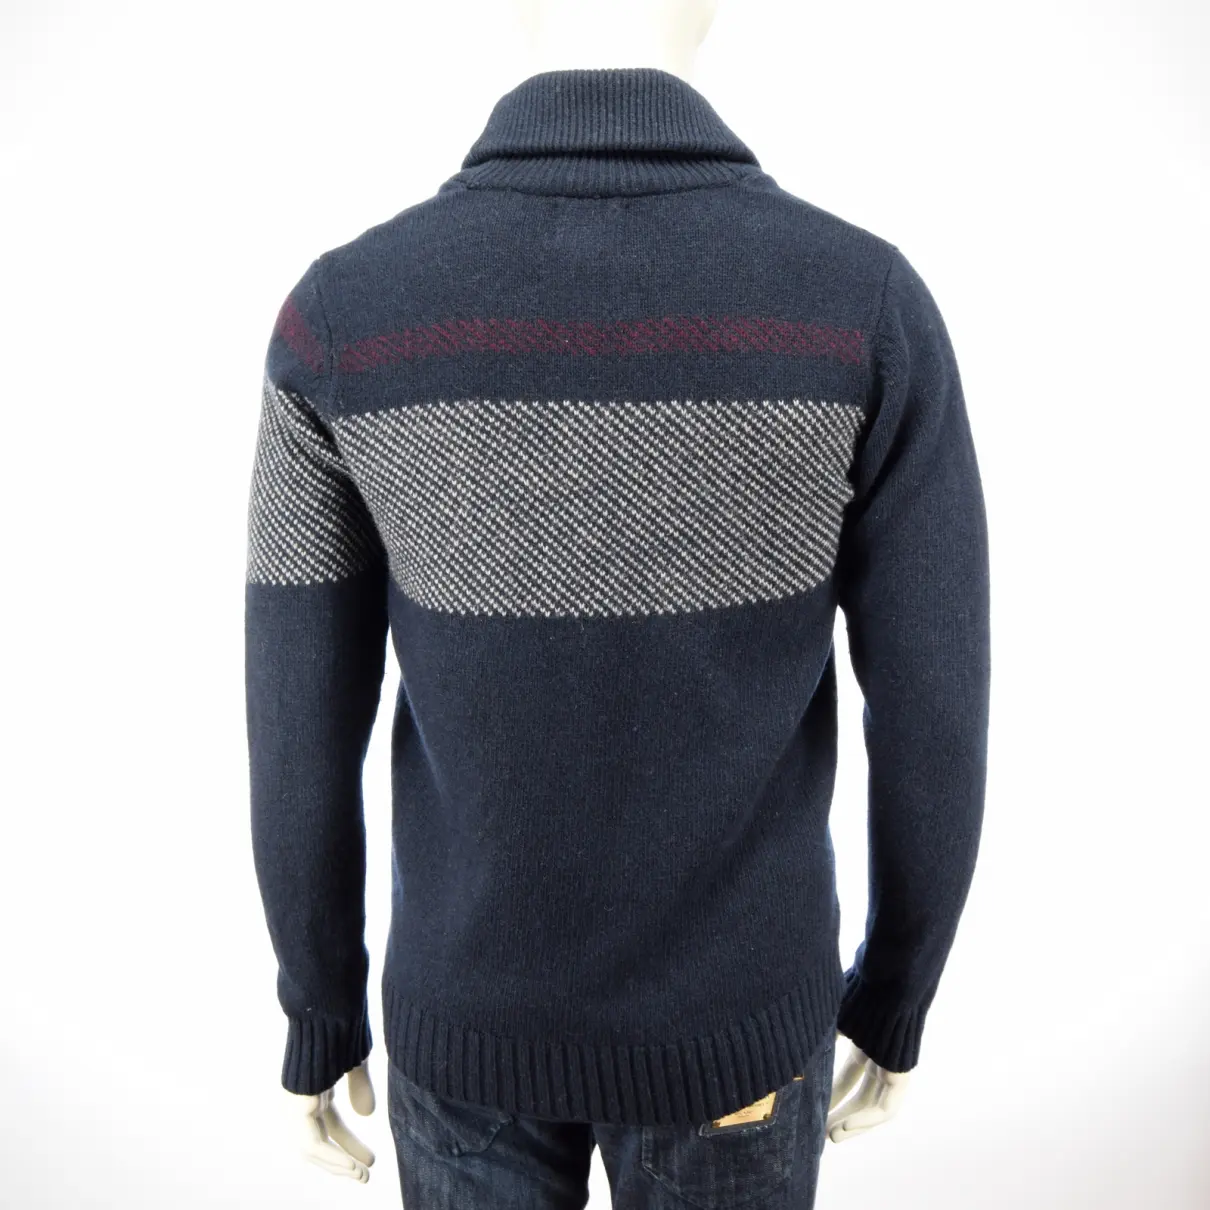 Buy Woolrich Wool sweatshirt online